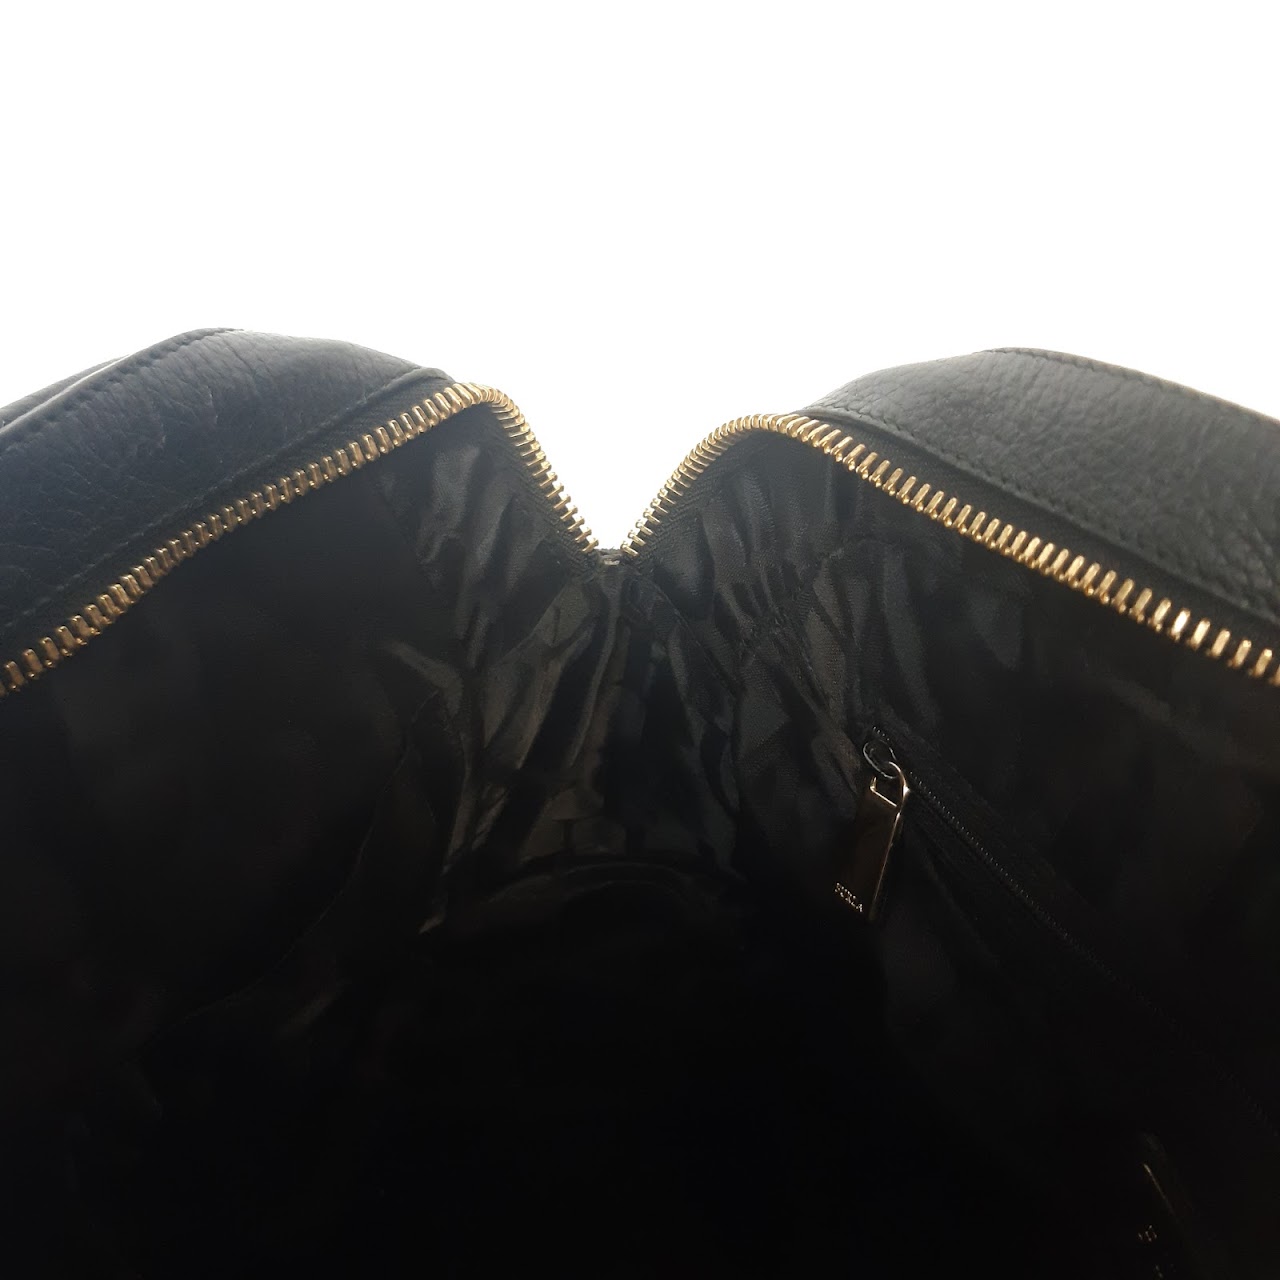 Furla Black Leather Crossbody Bag